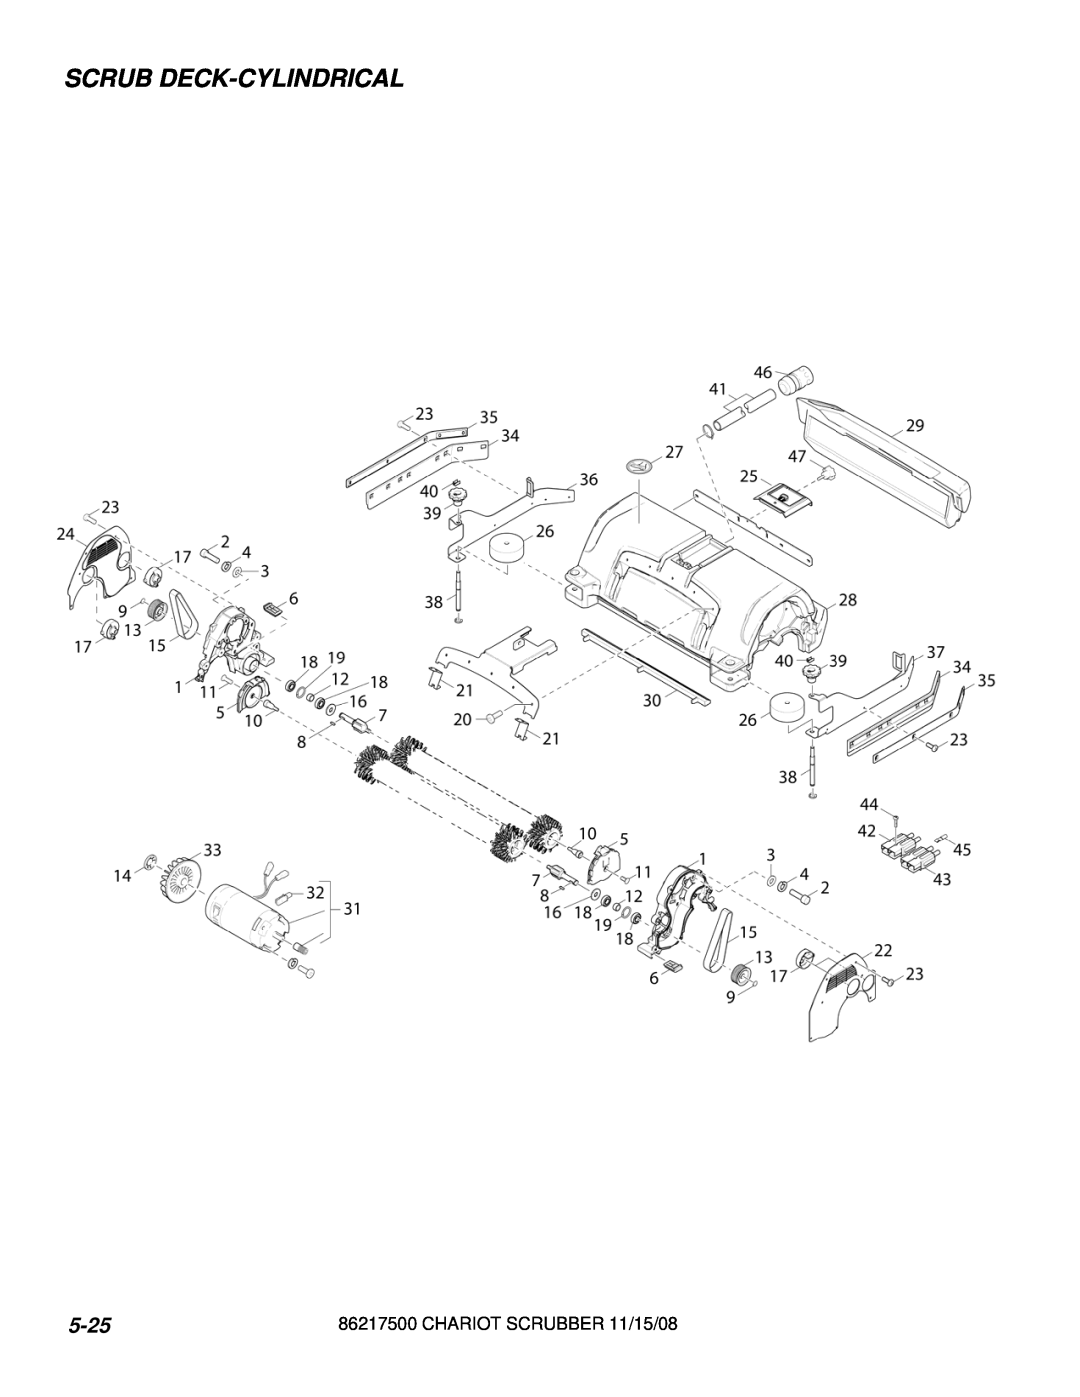 Windsor 10061090, CSX26SP, CSX24, 10061160 manual Scrub Deck-Cylindrical, 5-25, CHARIOT SCRUBBER 11/15/08 